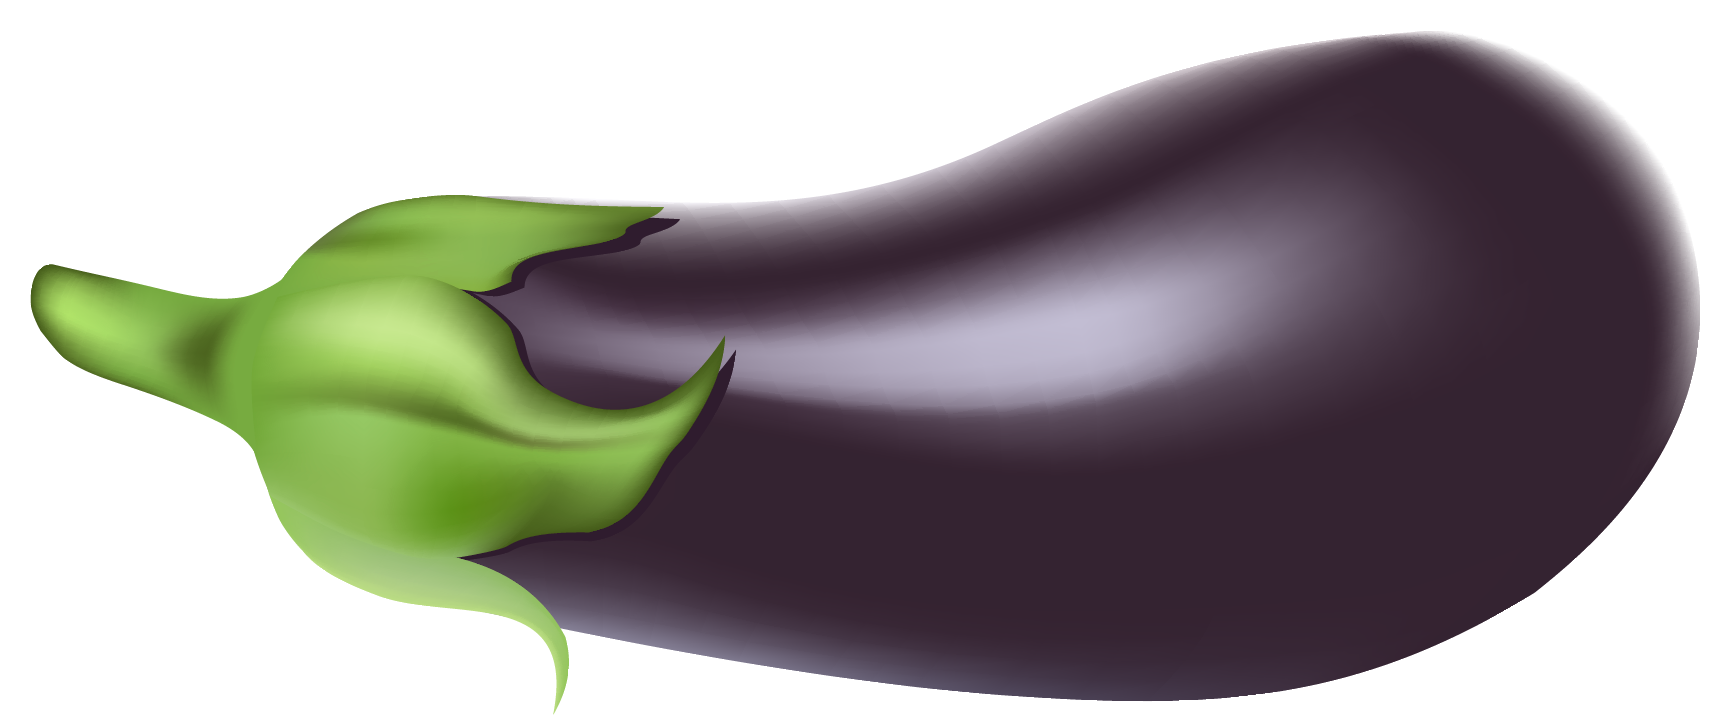 Eggplant Images   Cliparts Co